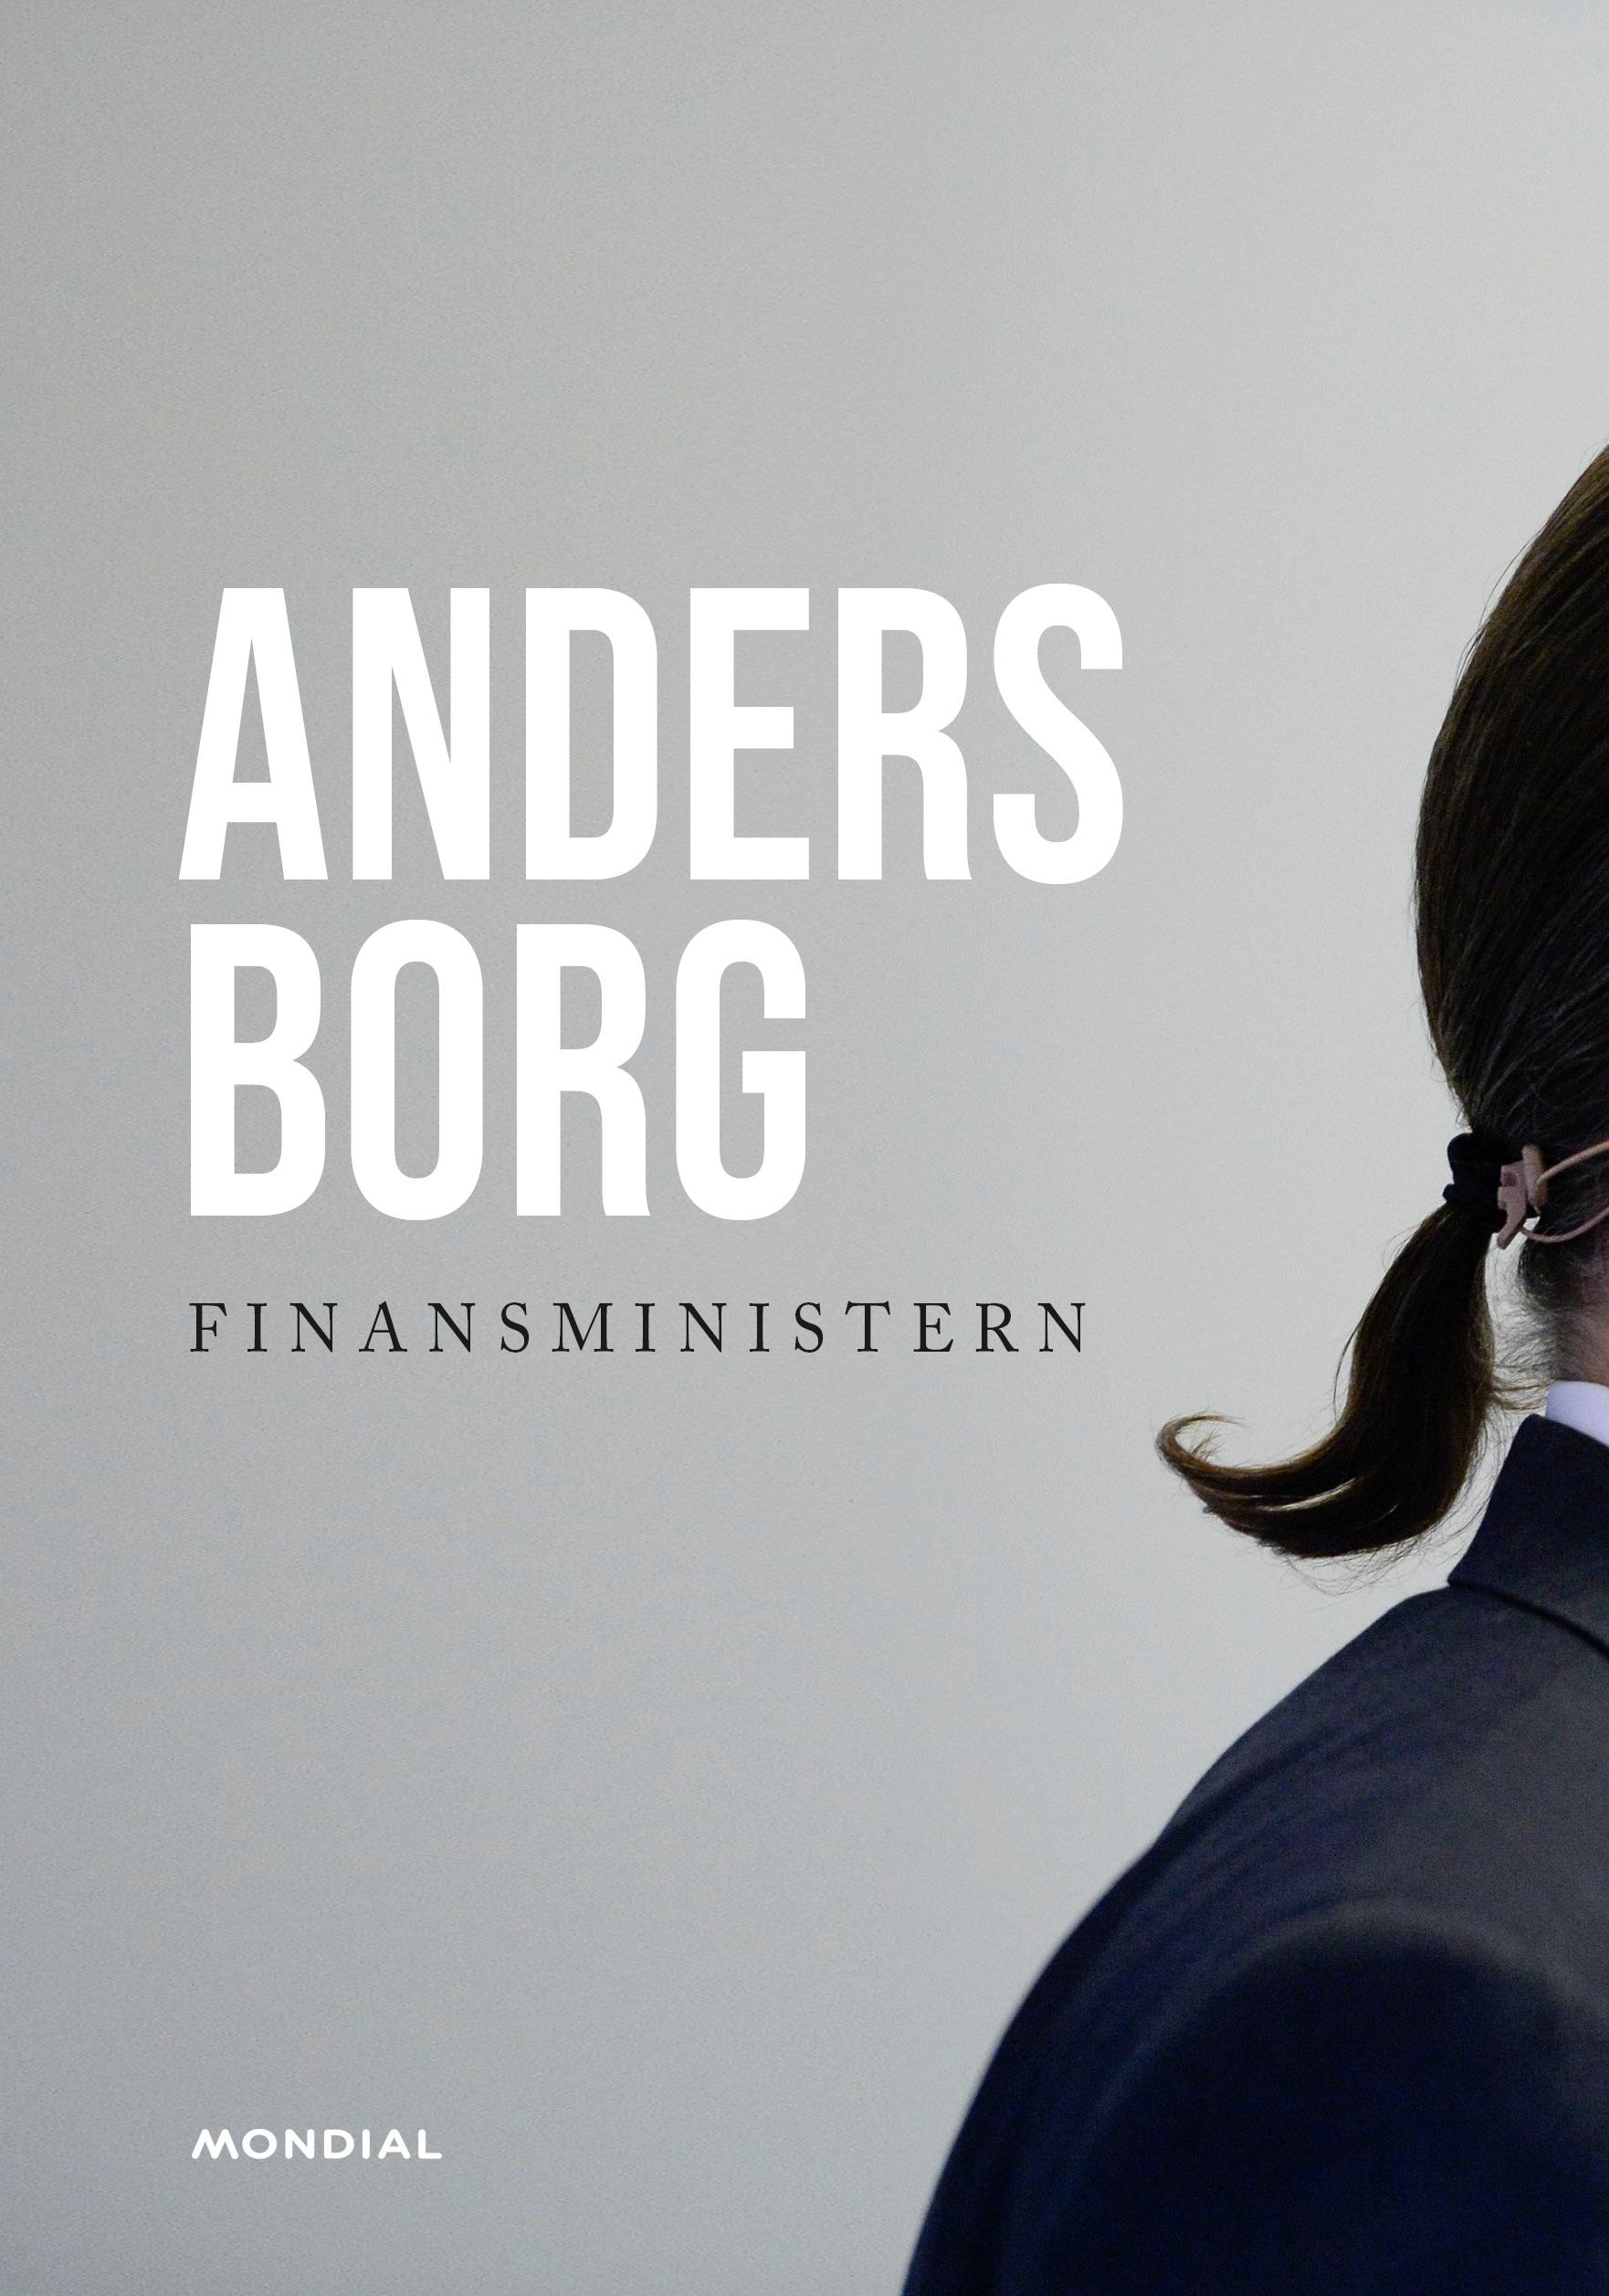 Anders Borgs bok släpps i november